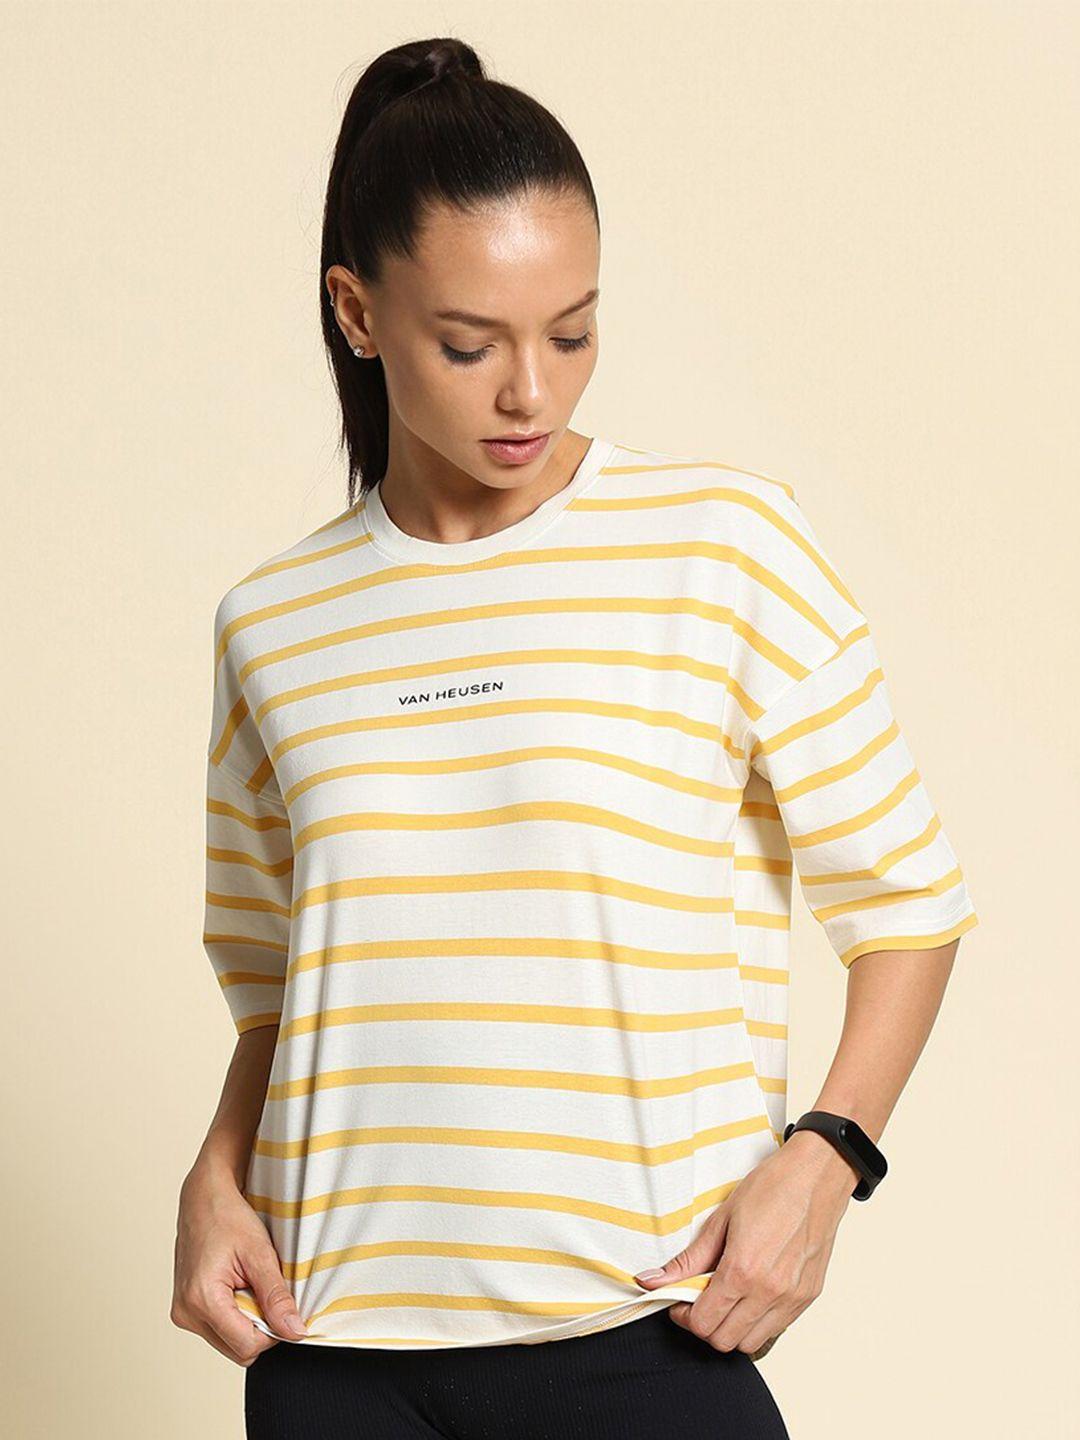 van heusen horizontal striped cotton t-shirt